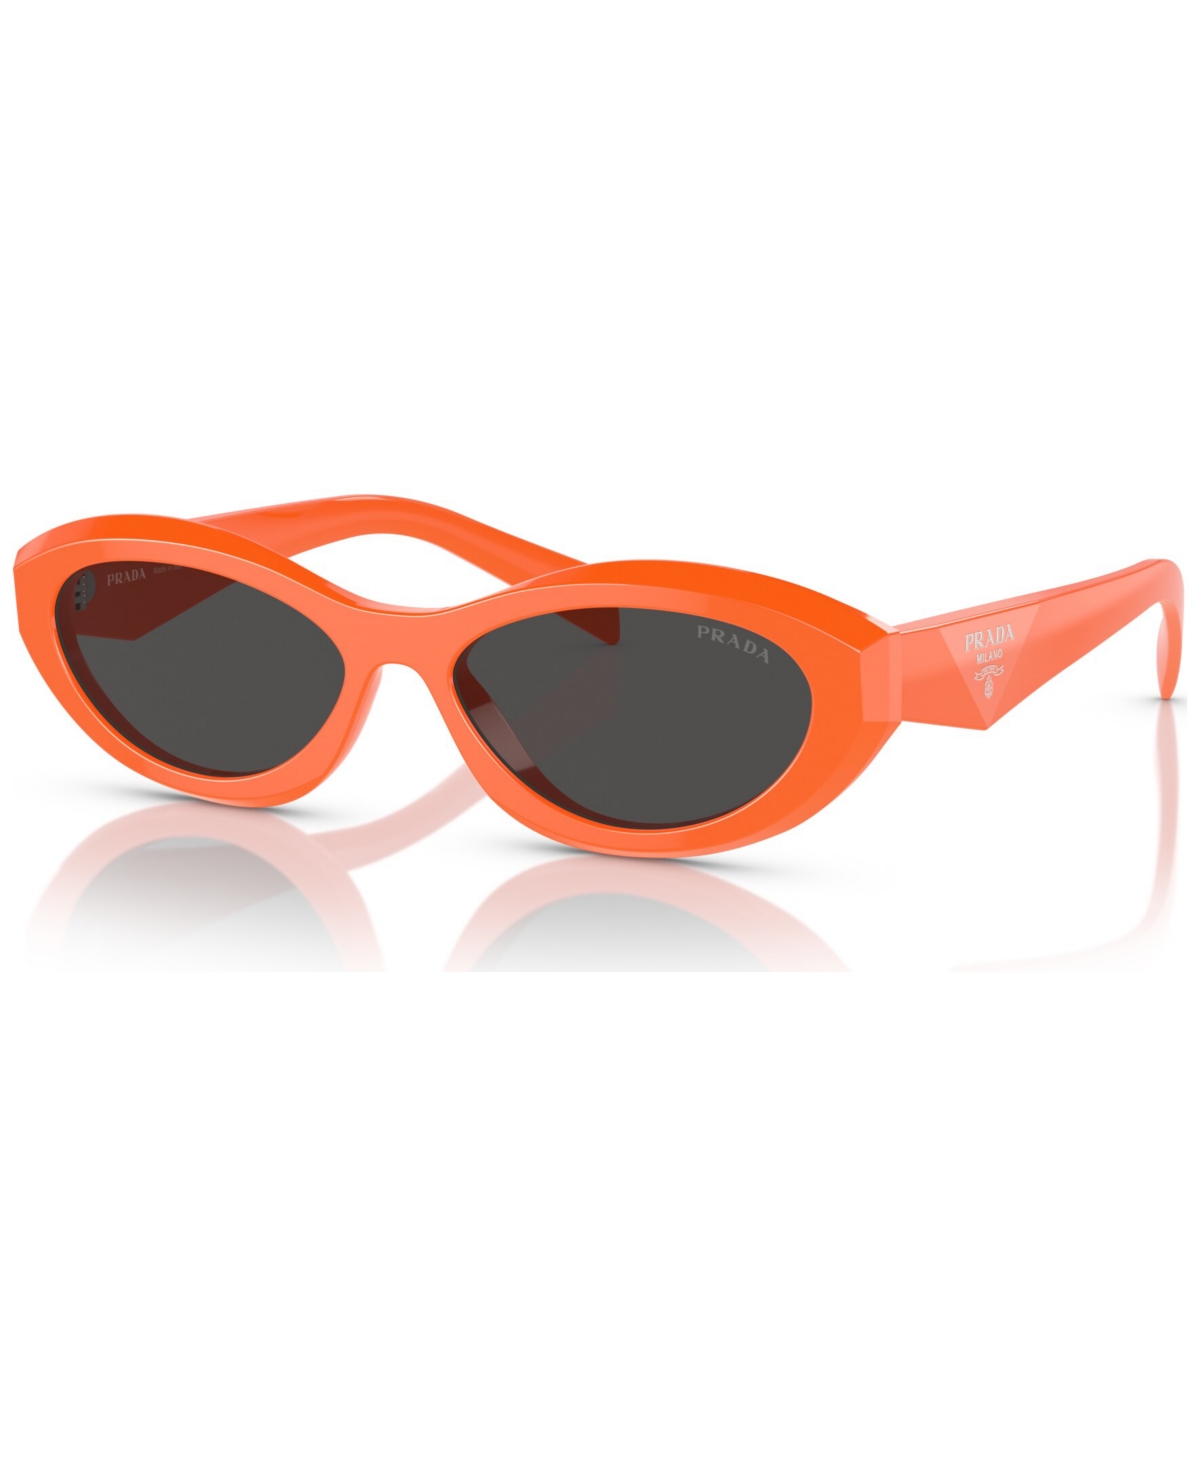 Prada Women's Sunglasses, Pr 26zs In Orange